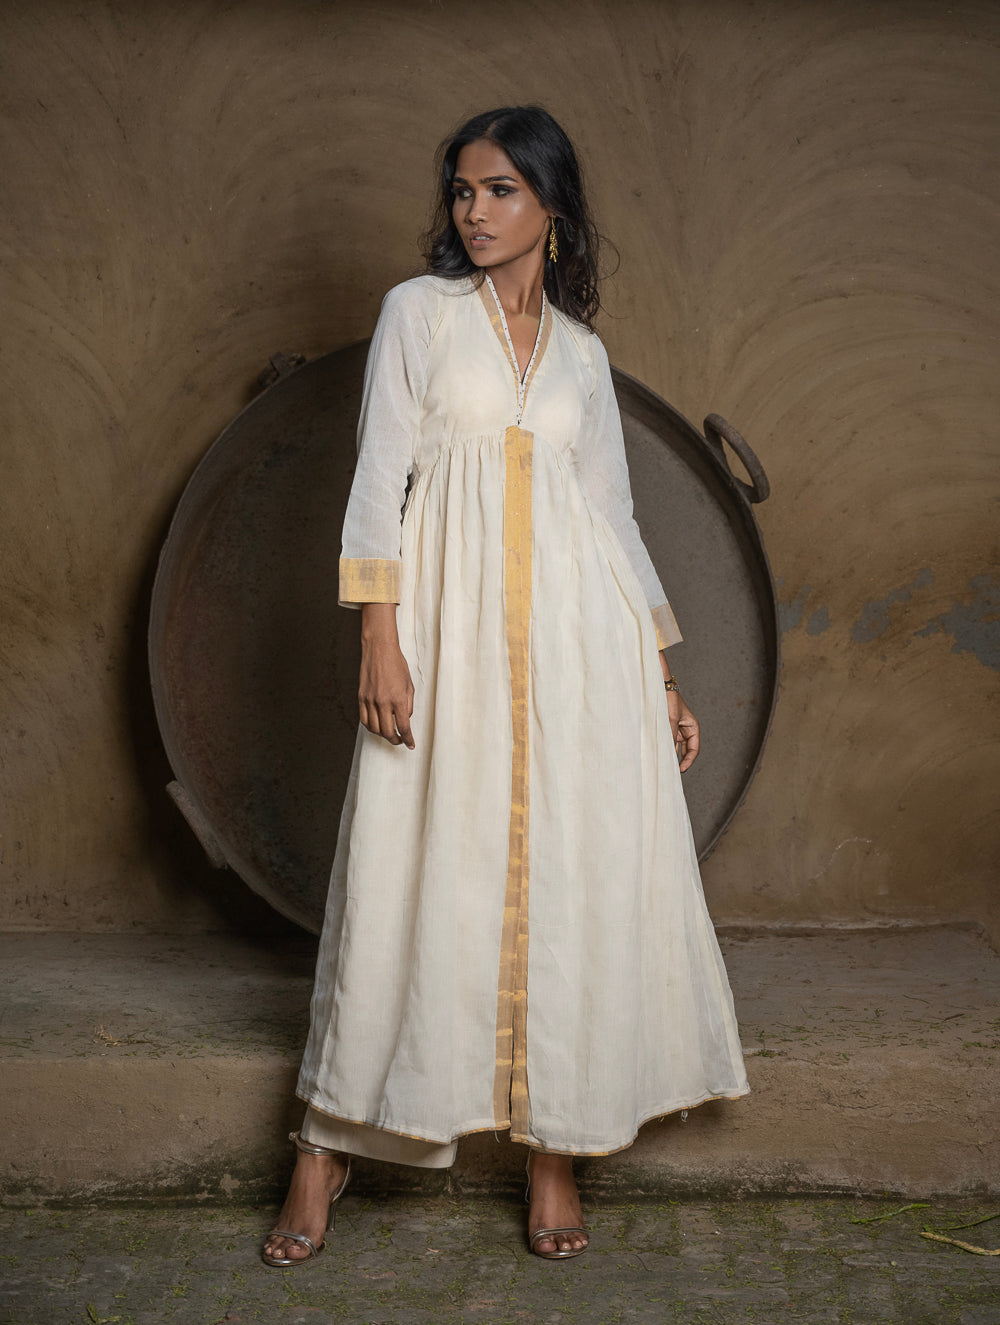 Load image into Gallery viewer, Classic Elegance. The Kerala Kasavu Cotton &amp; Zari Long Ethnic Kurta / Dress - White &amp; Gold. 